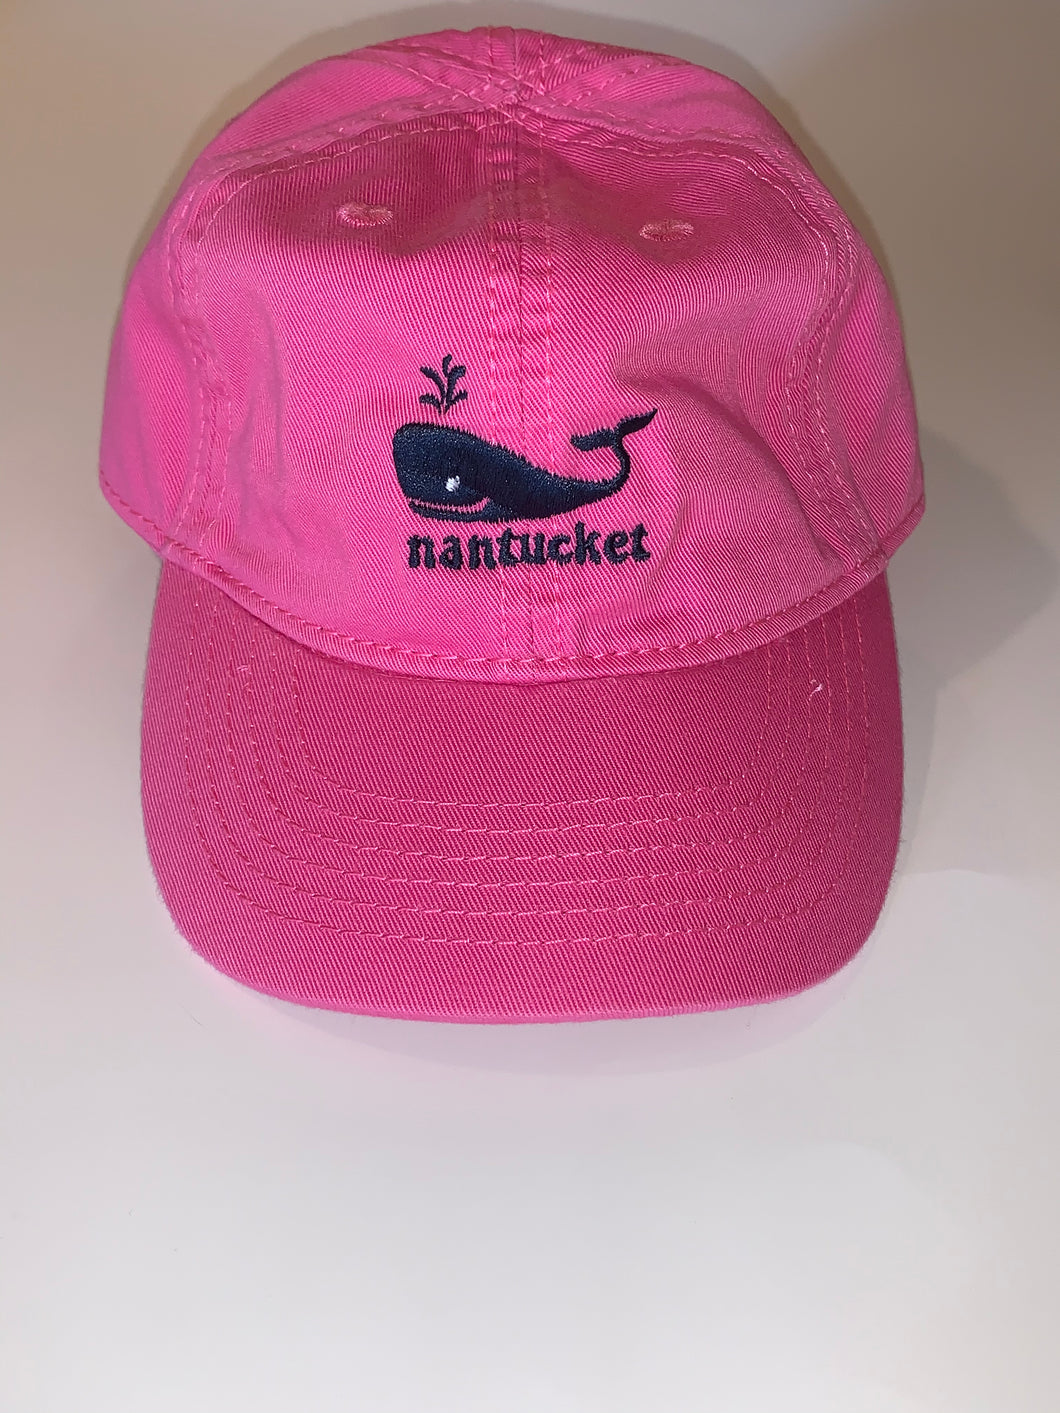 Pink Nantucket baseball hat